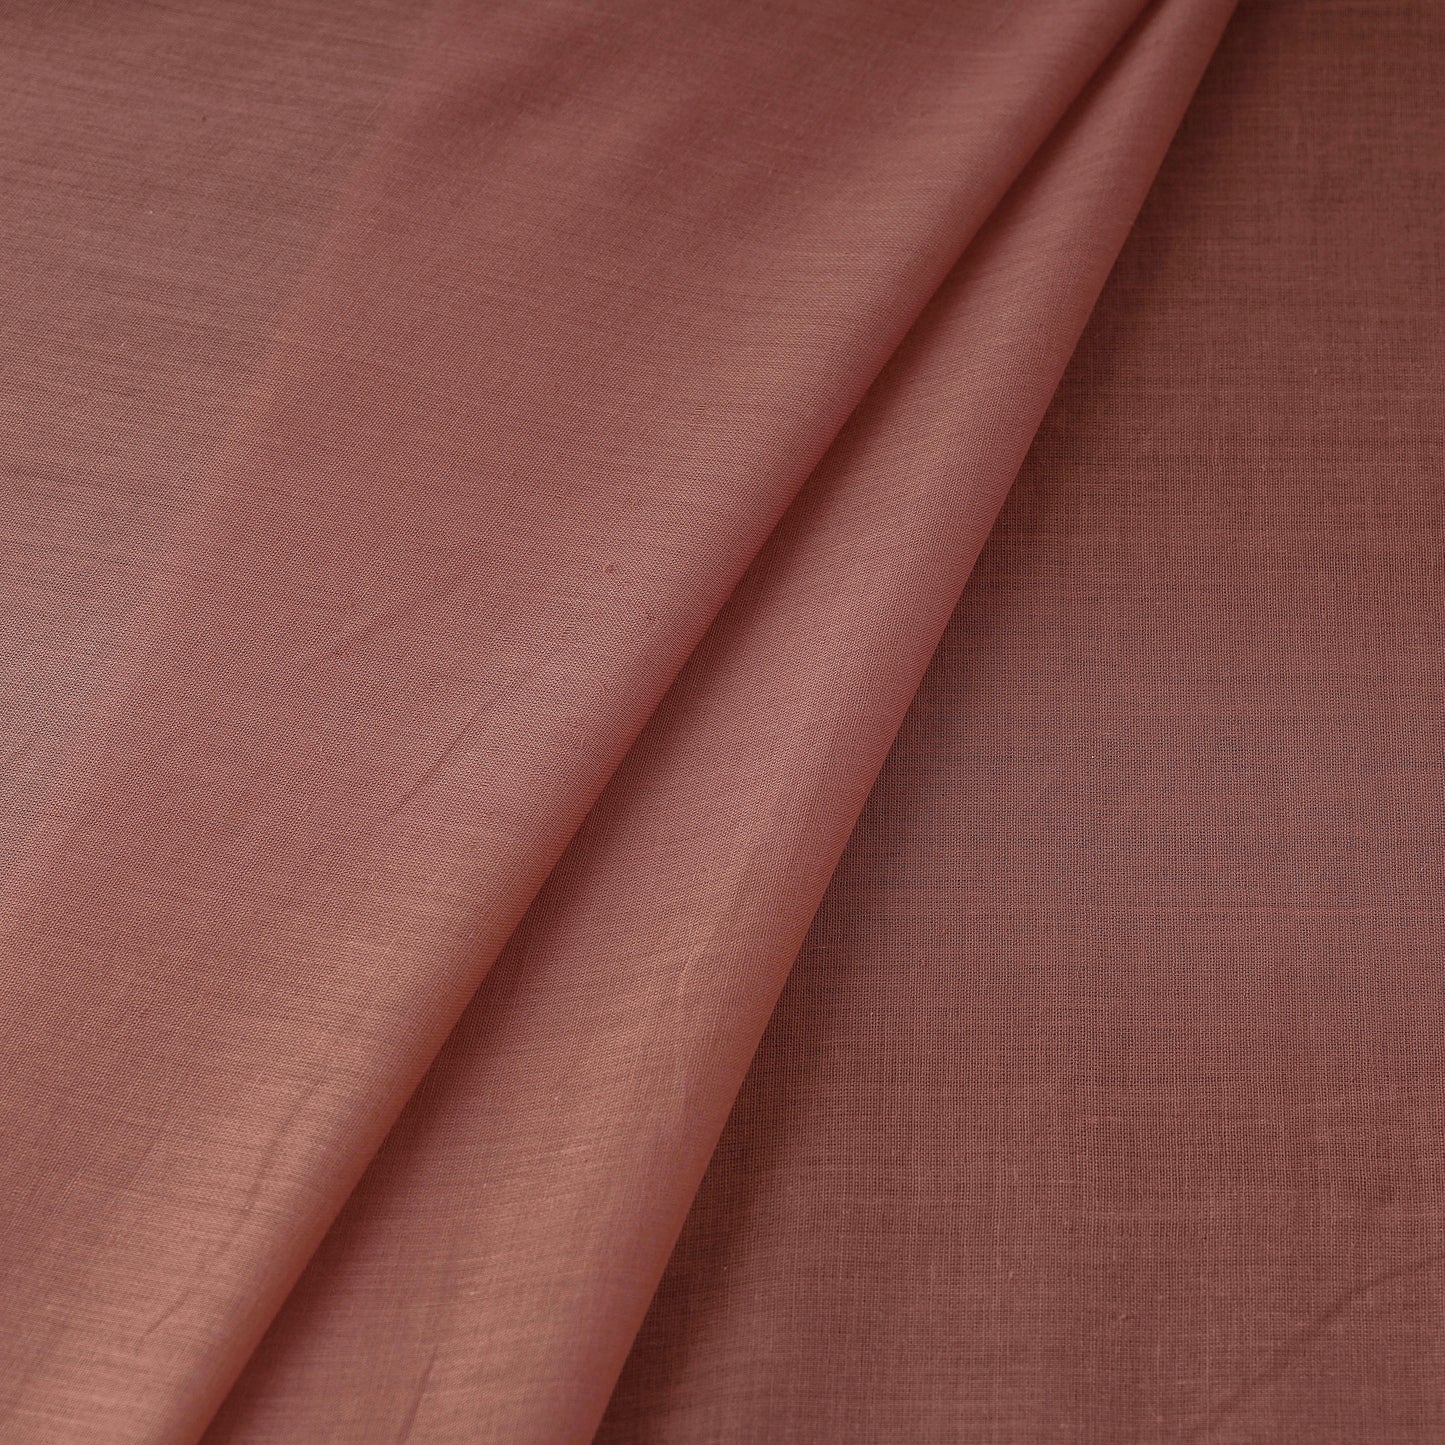 Brown - Prewashed Plain Dyed Cotton Fabric 13